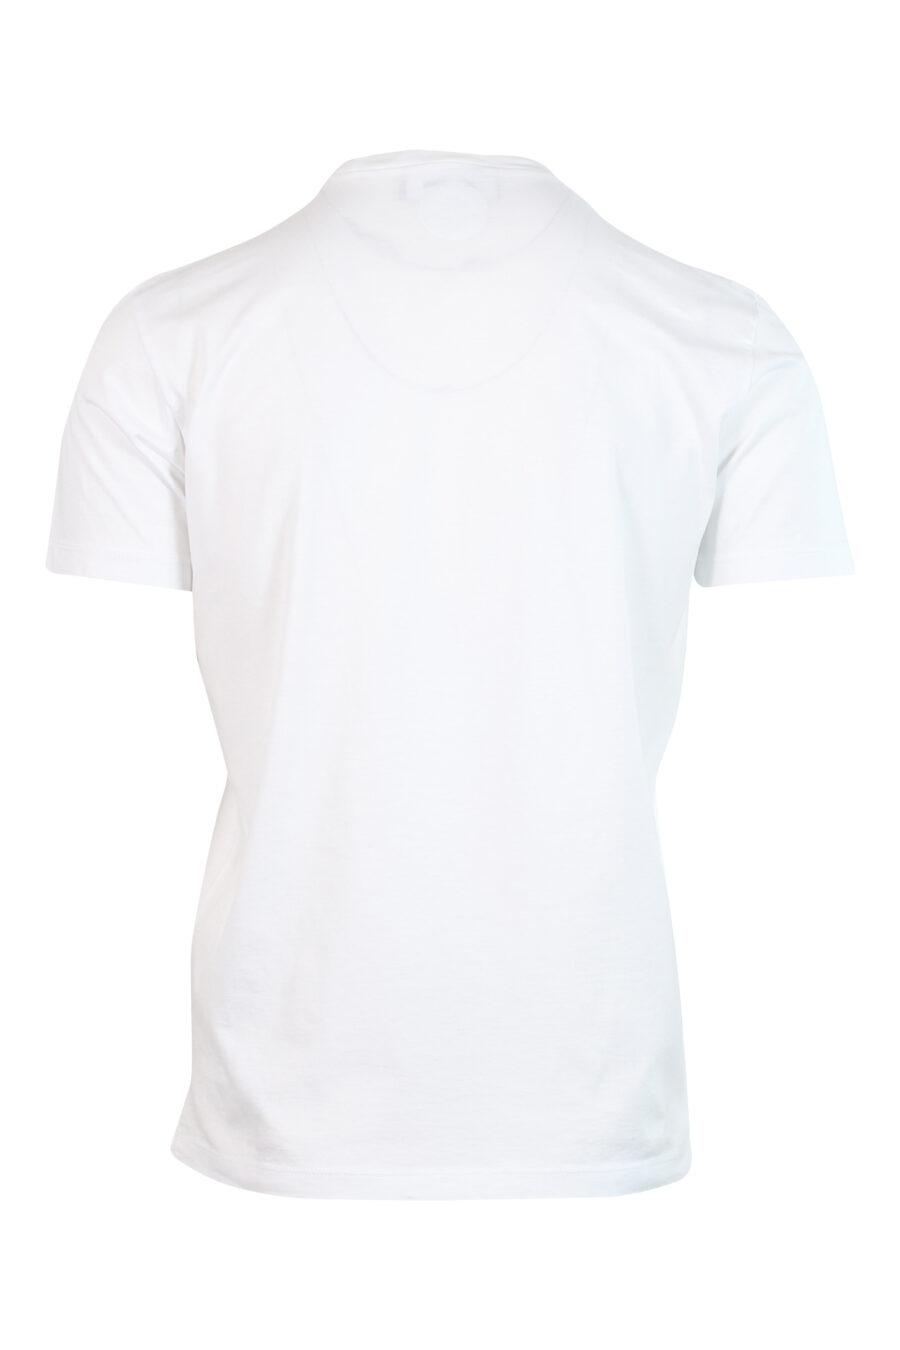 Camiseta blanca con maxilogo gráfico hoja delineada - 8052134940945 2